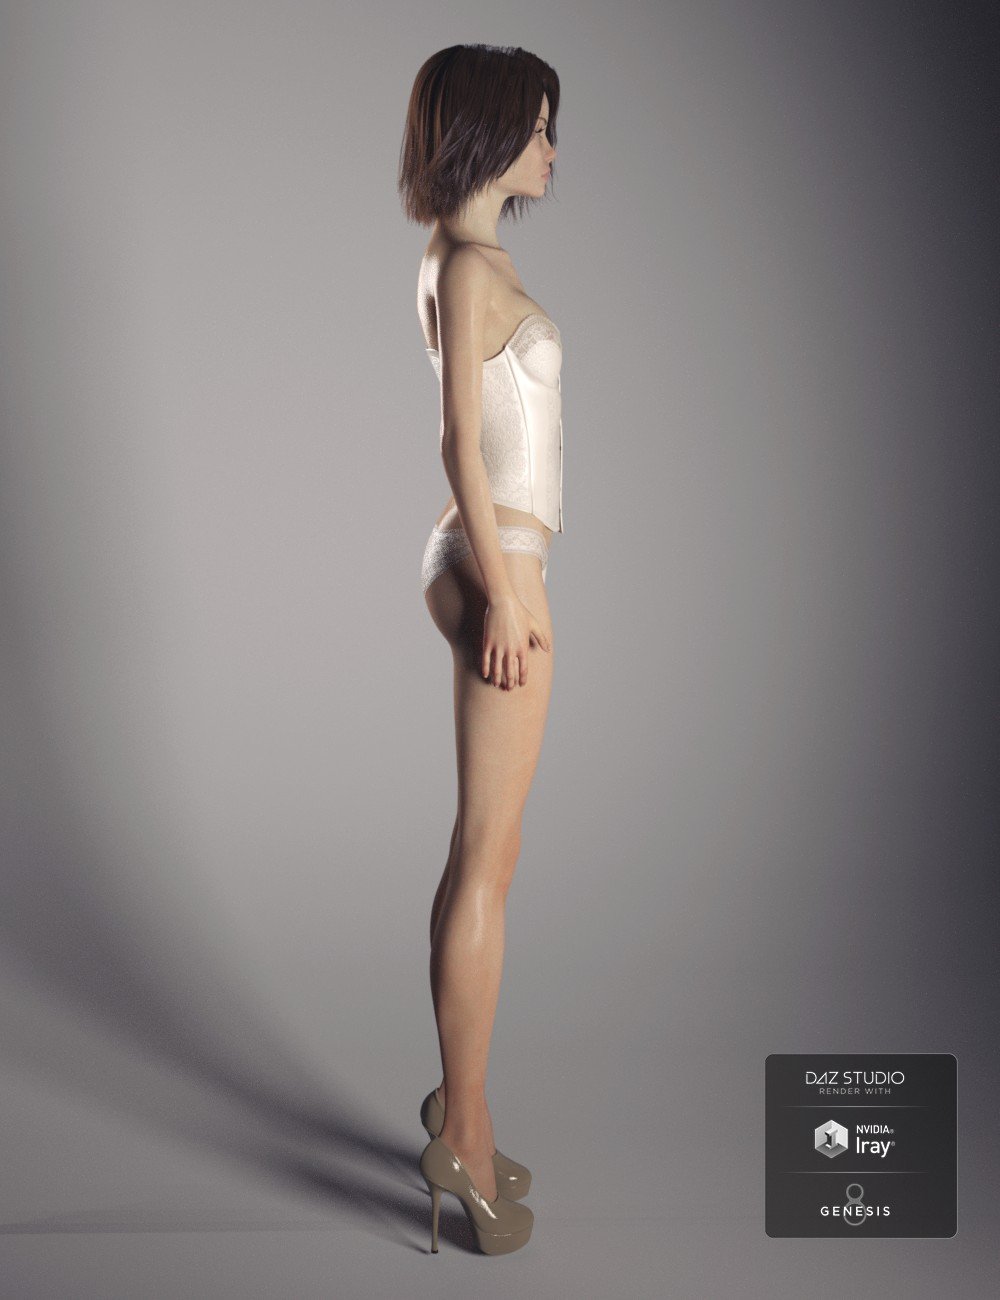 SC Lauren for Genesis 8 Female by: Second-Circle, 3D Models by Daz 3D